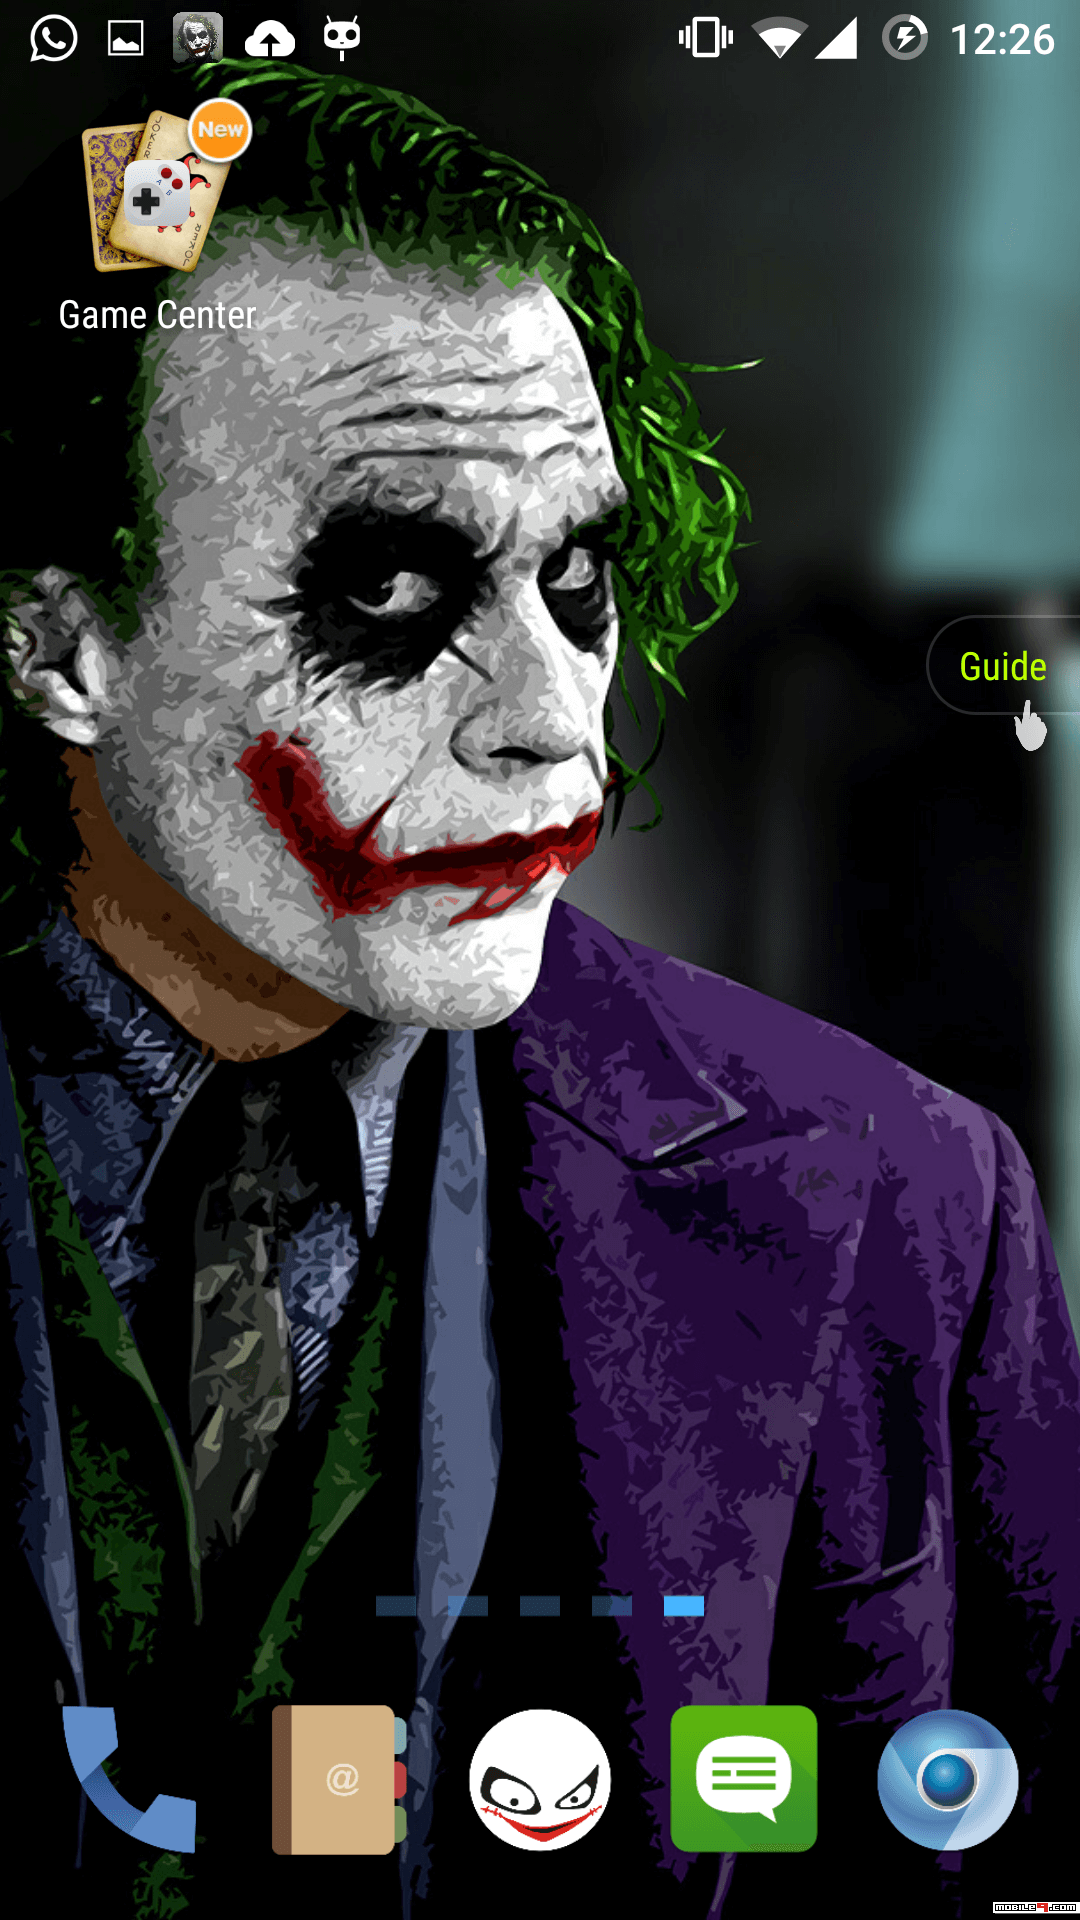 Muat Turun Batman The Joker Launcher Hd Android Apex Launcher Themes 4519862 Android Apk Themes Launcher Free Movies Knight Dark Batman Joker Mobile9